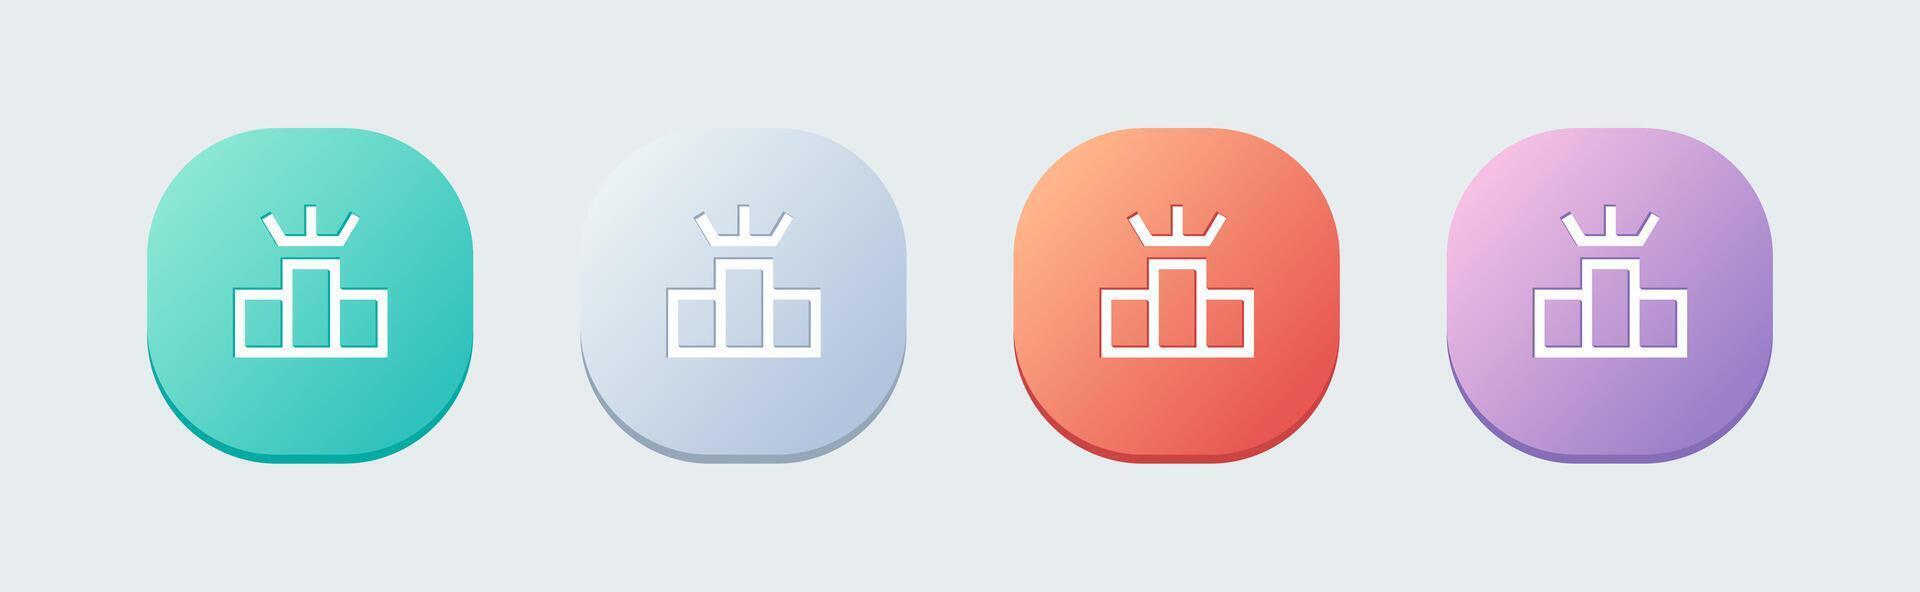 ledare styrelse linje ikon i platt design stil. konkurrens tecken illustration. vektor